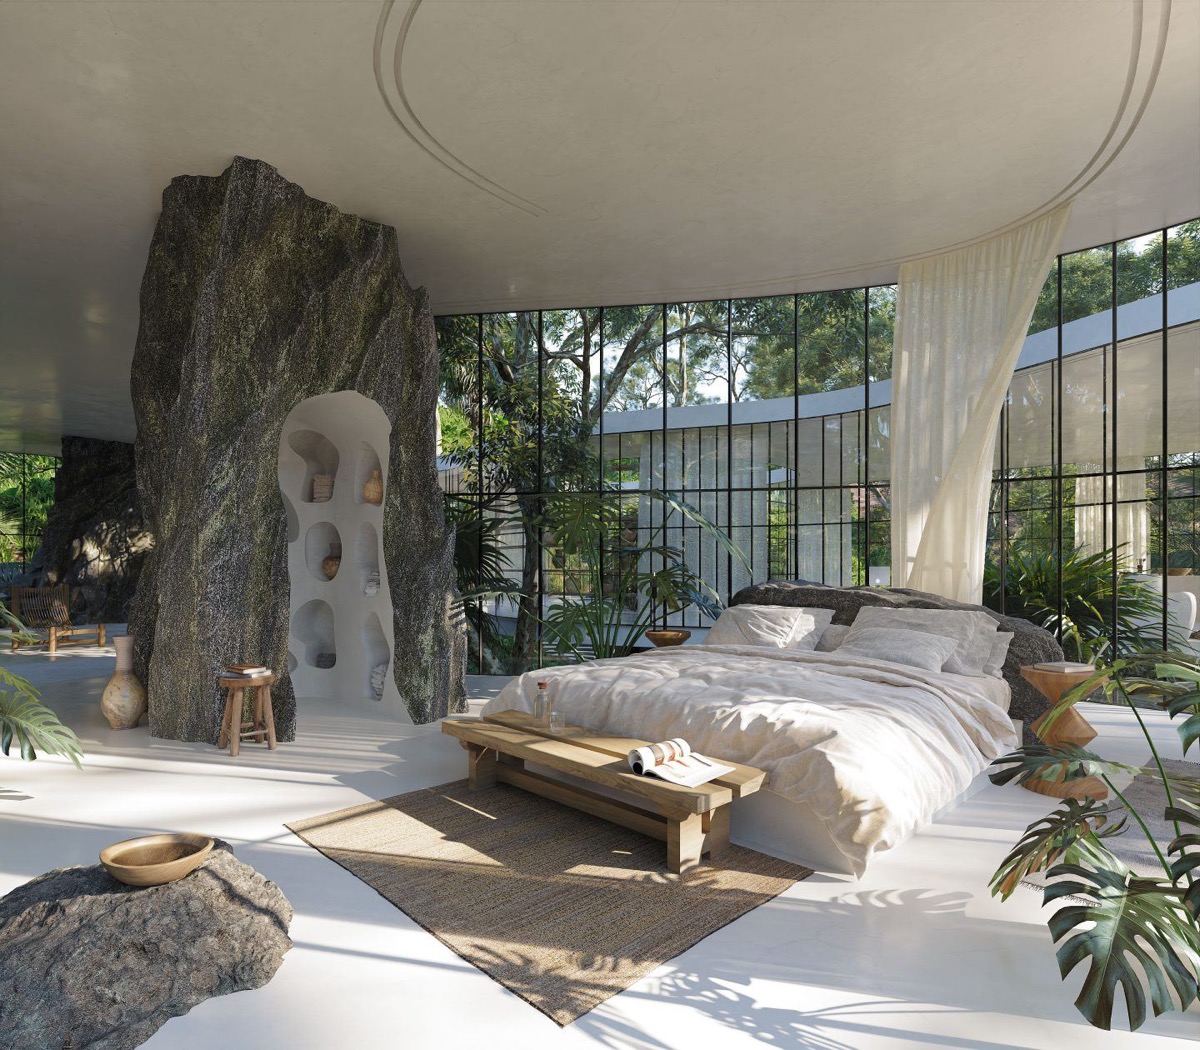 20 Aesthetic Bedrooms To Inspire Your Next Dreamy Decor Scheme